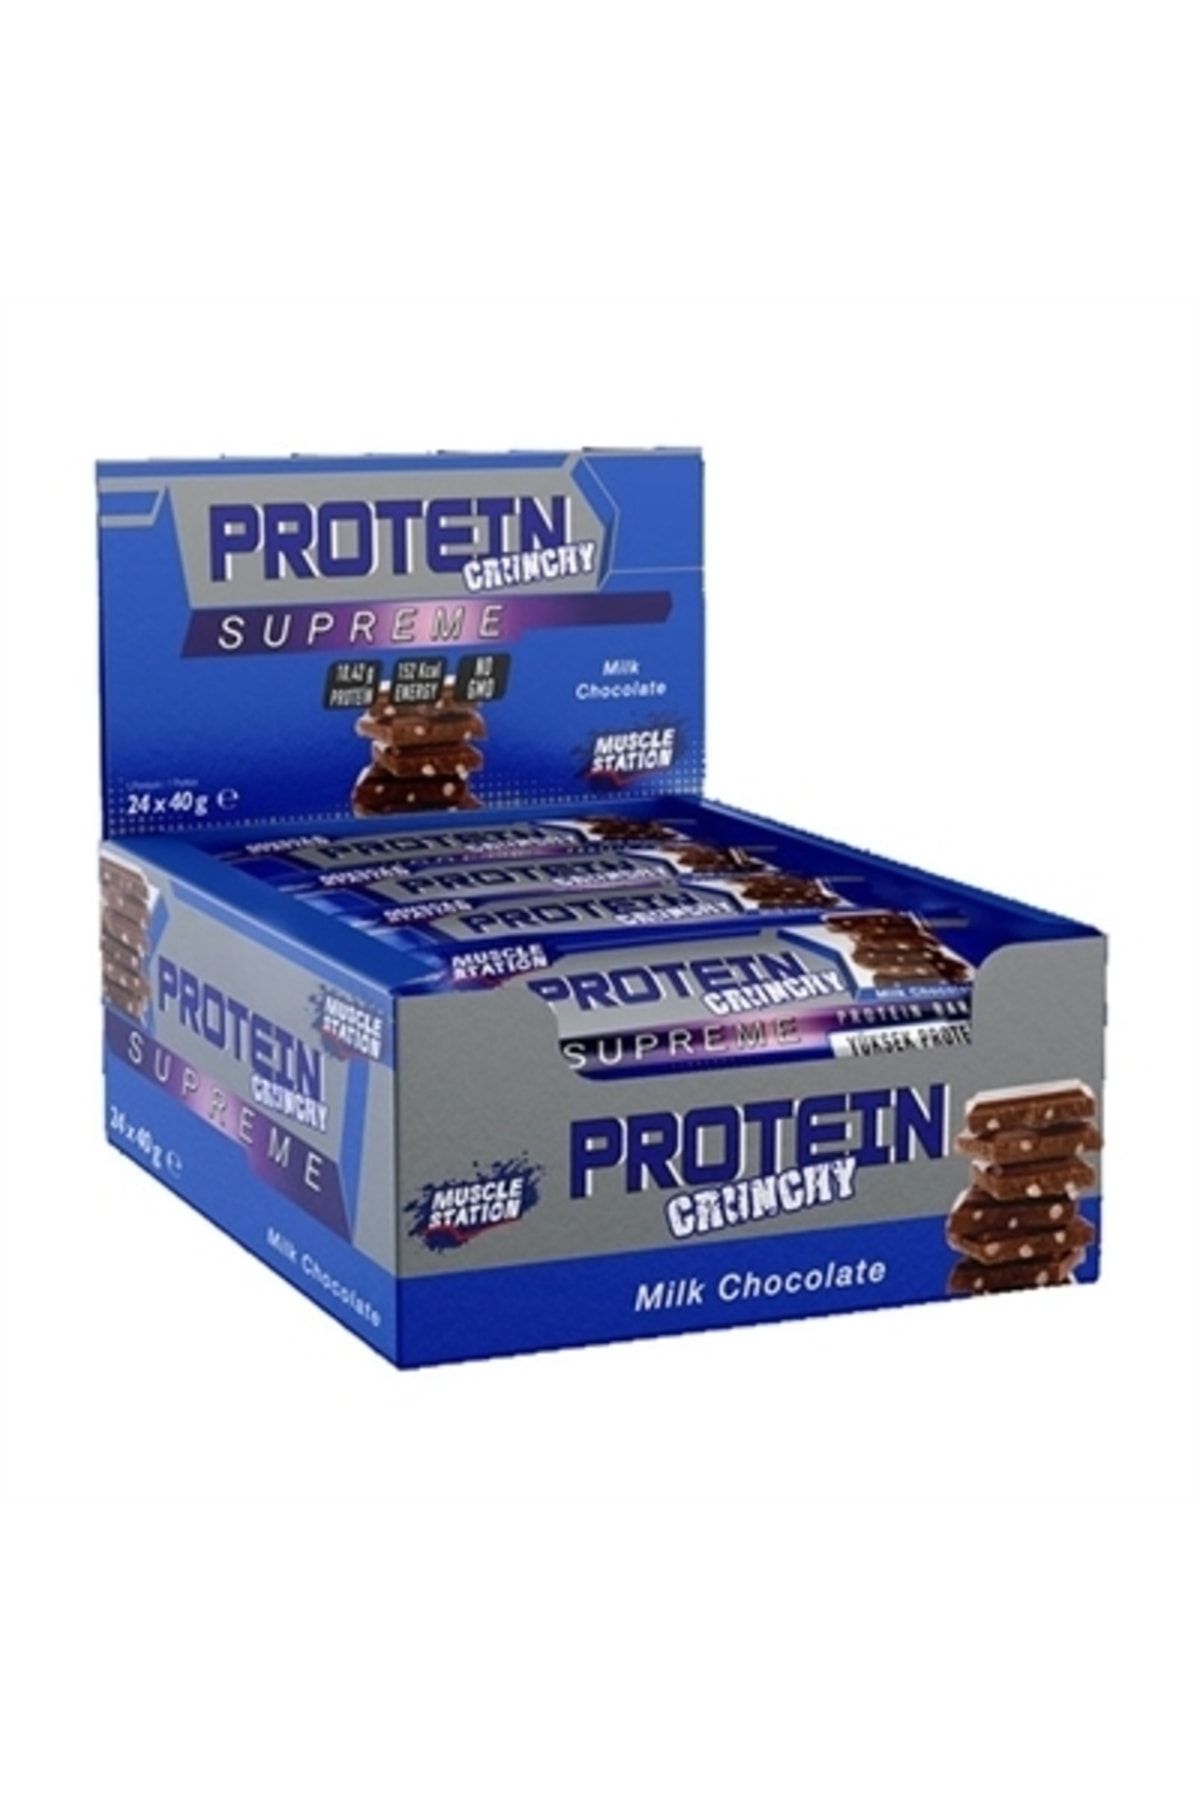 Muscle Station Supreme Protein Bar Dark Çikolata 24 Adet